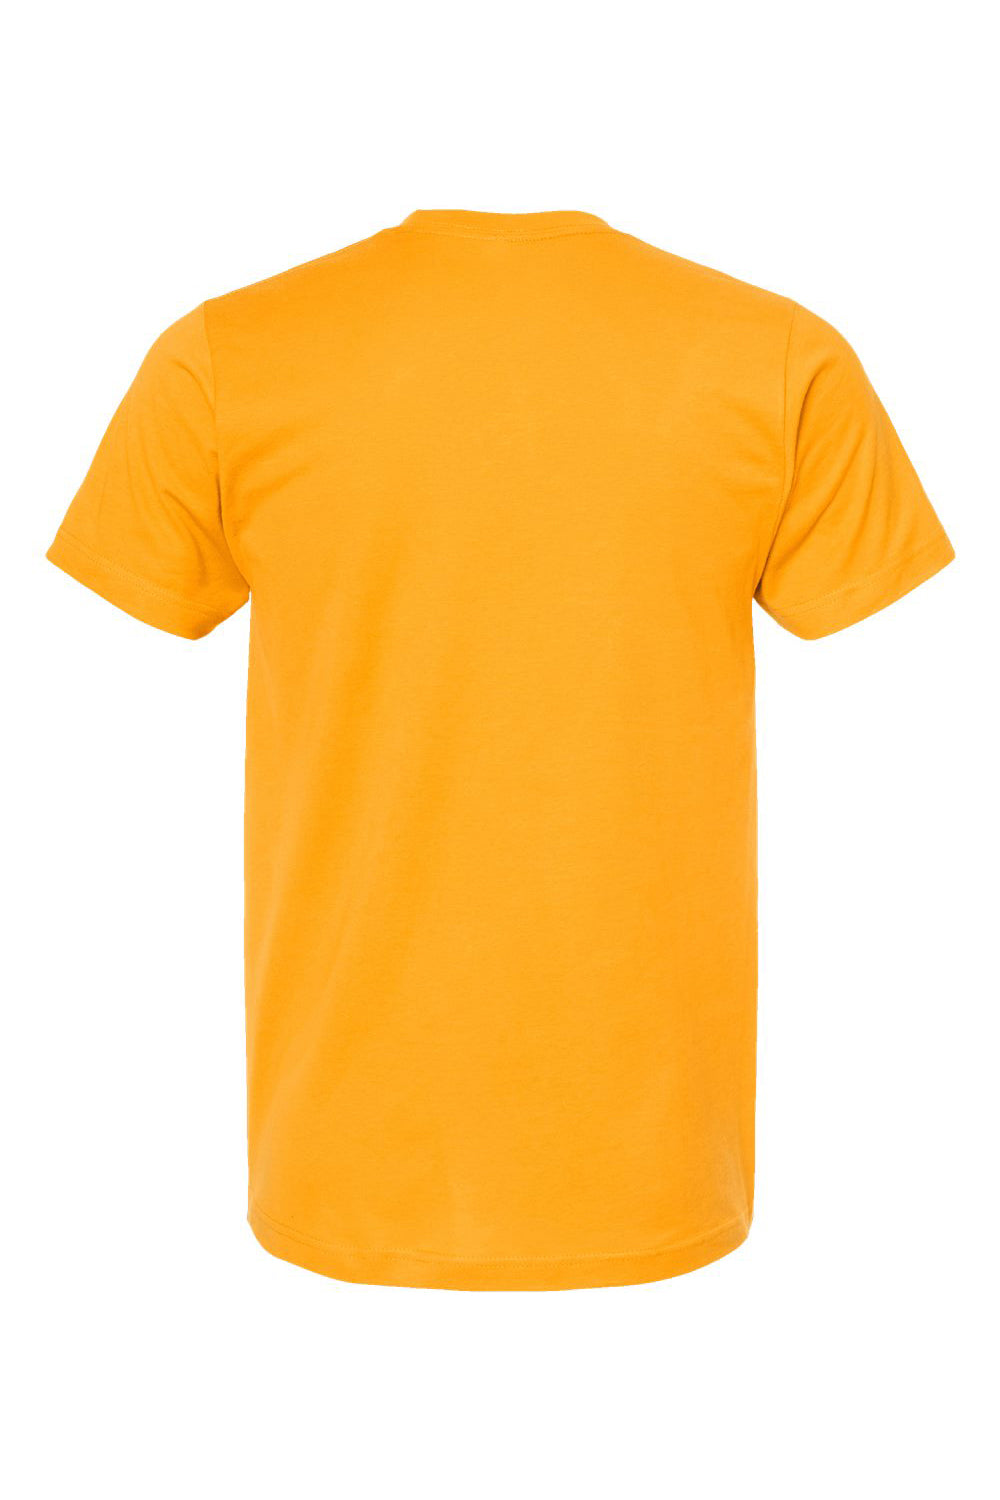 Tultex 202 Mens Fine Jersey Short Sleeve Crewneck T-Shirt Gold Flat Back